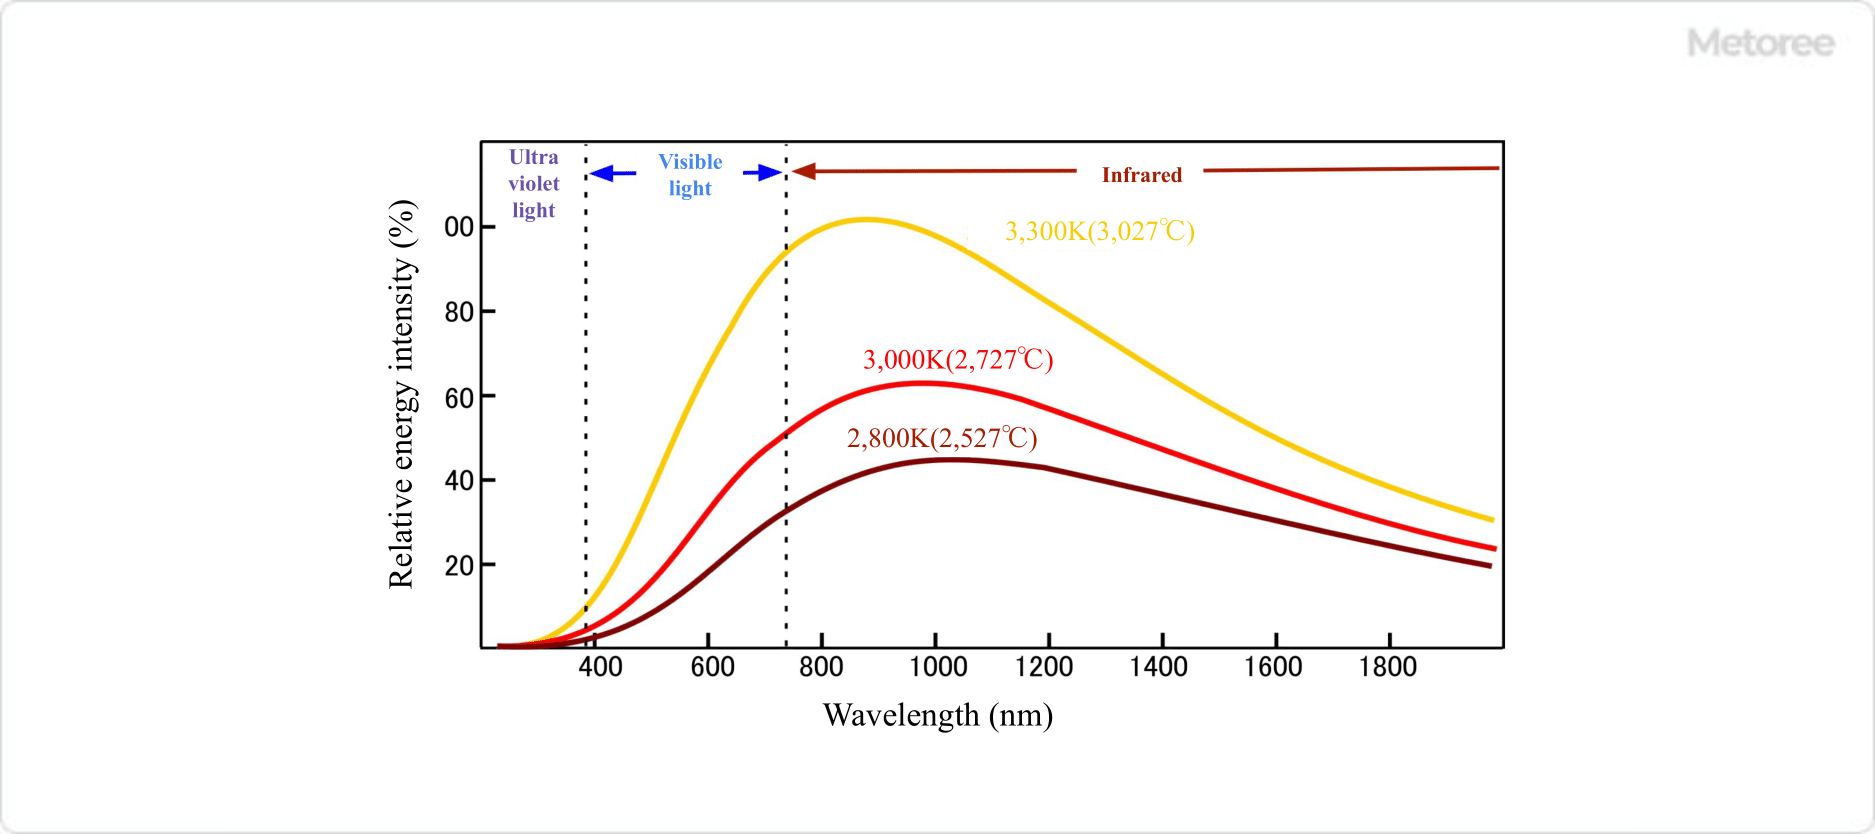 Figure 3. Filament temperature and intensity distribution of emission spectrum